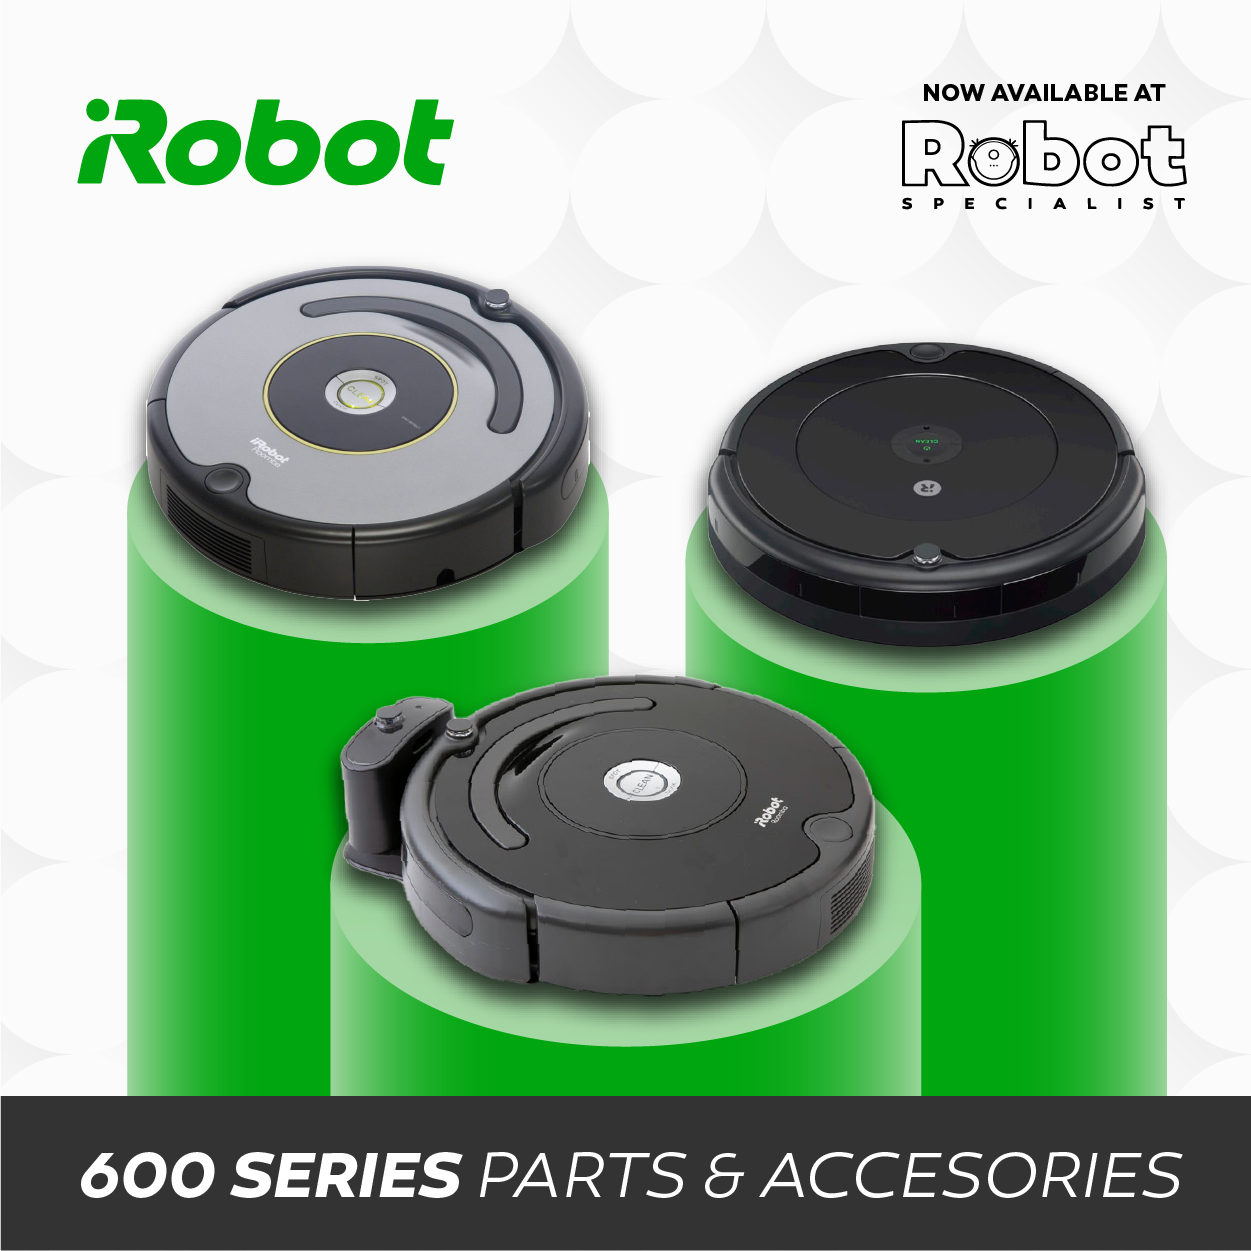 Mundskyl Interessant kreativ iRobot Roomba 600 Series | Robot Specialist